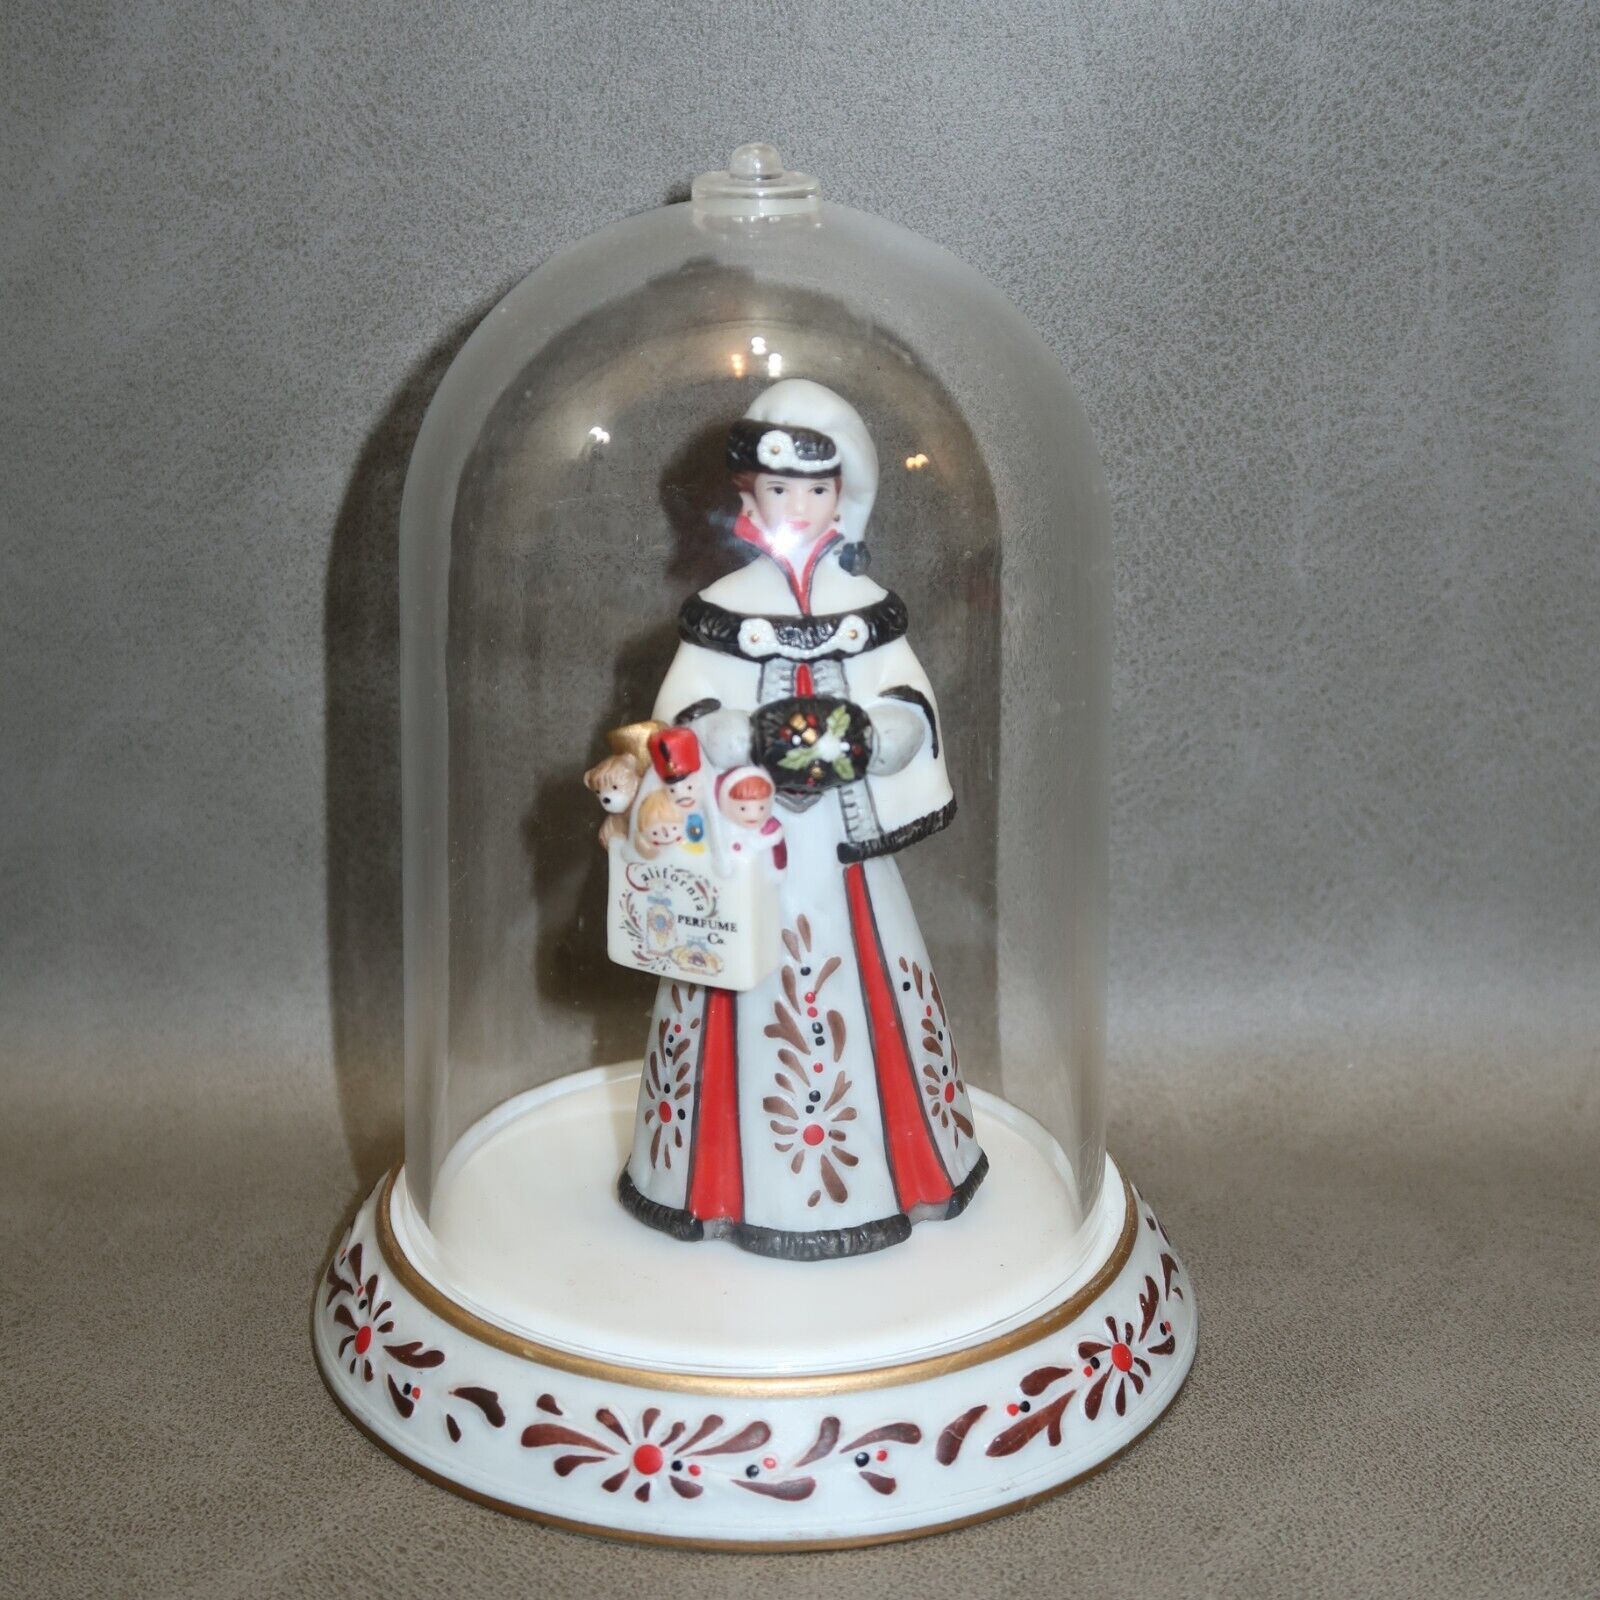 Avon 1999 Mrs. Albee Presidents Club Award Figurine Miniature in Glass Dome